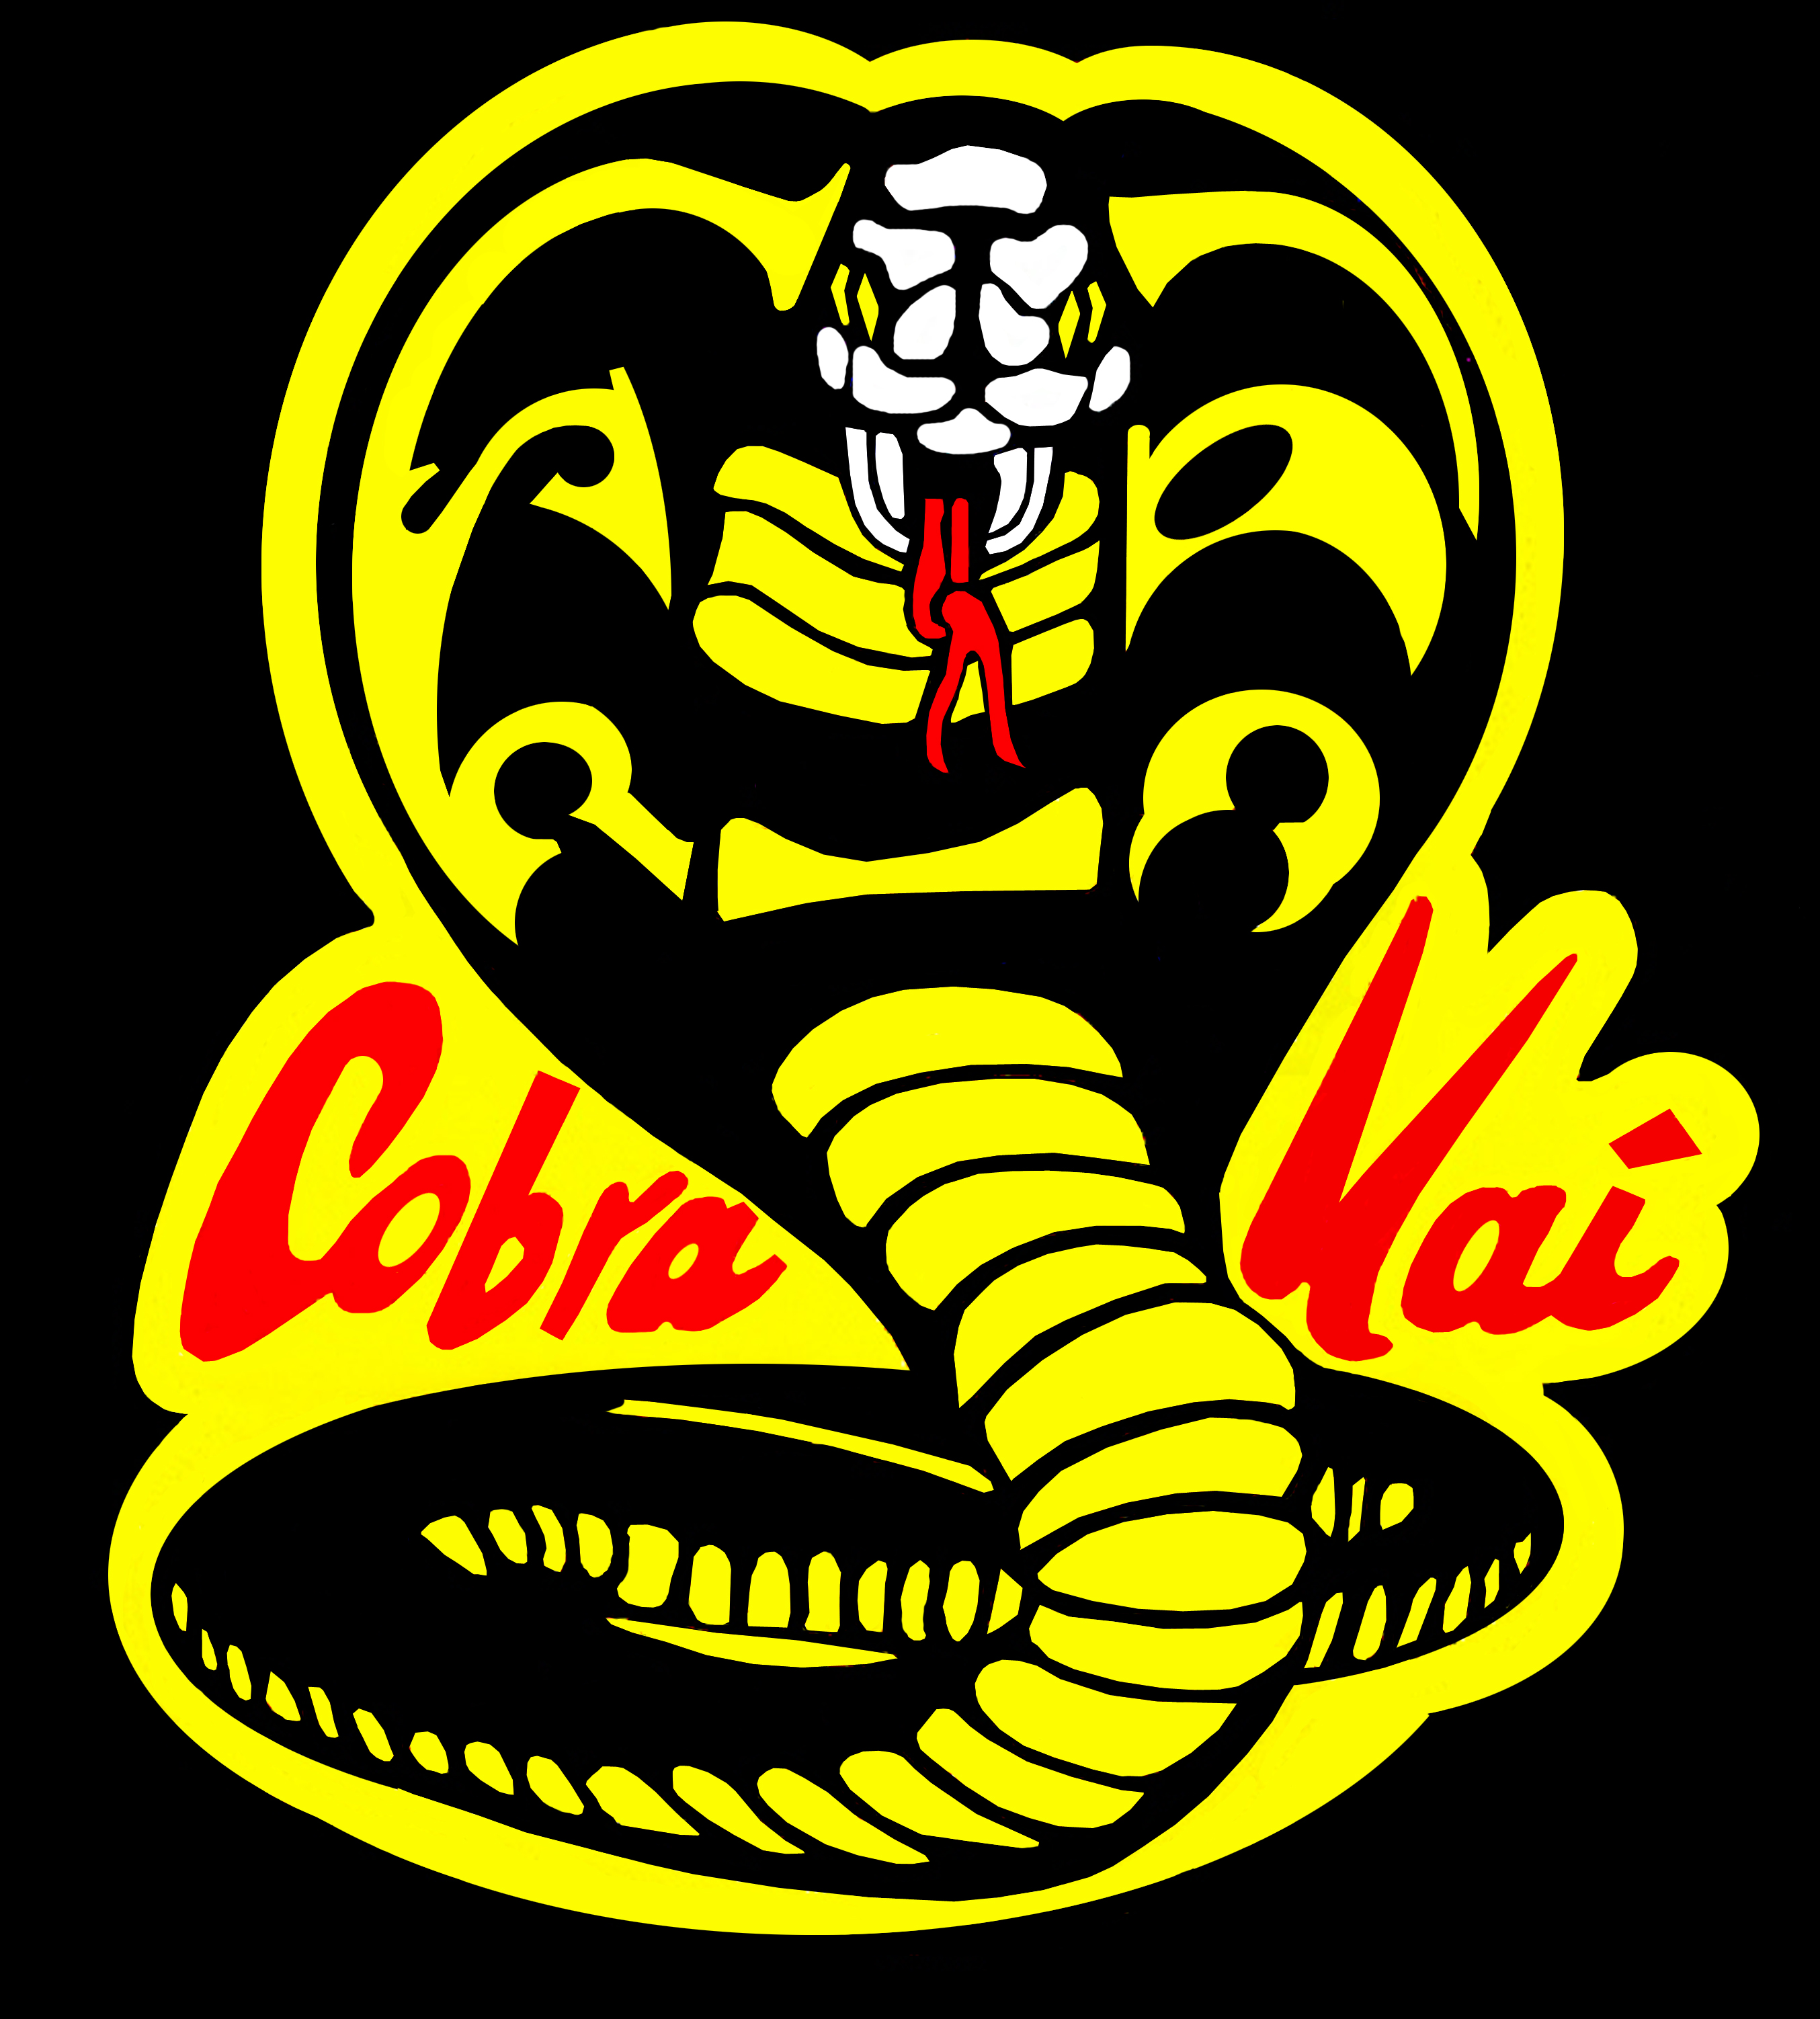 Cobra Kai Snake Logo Large CANVAS Art Print Gift Multiple Sizes | eBay